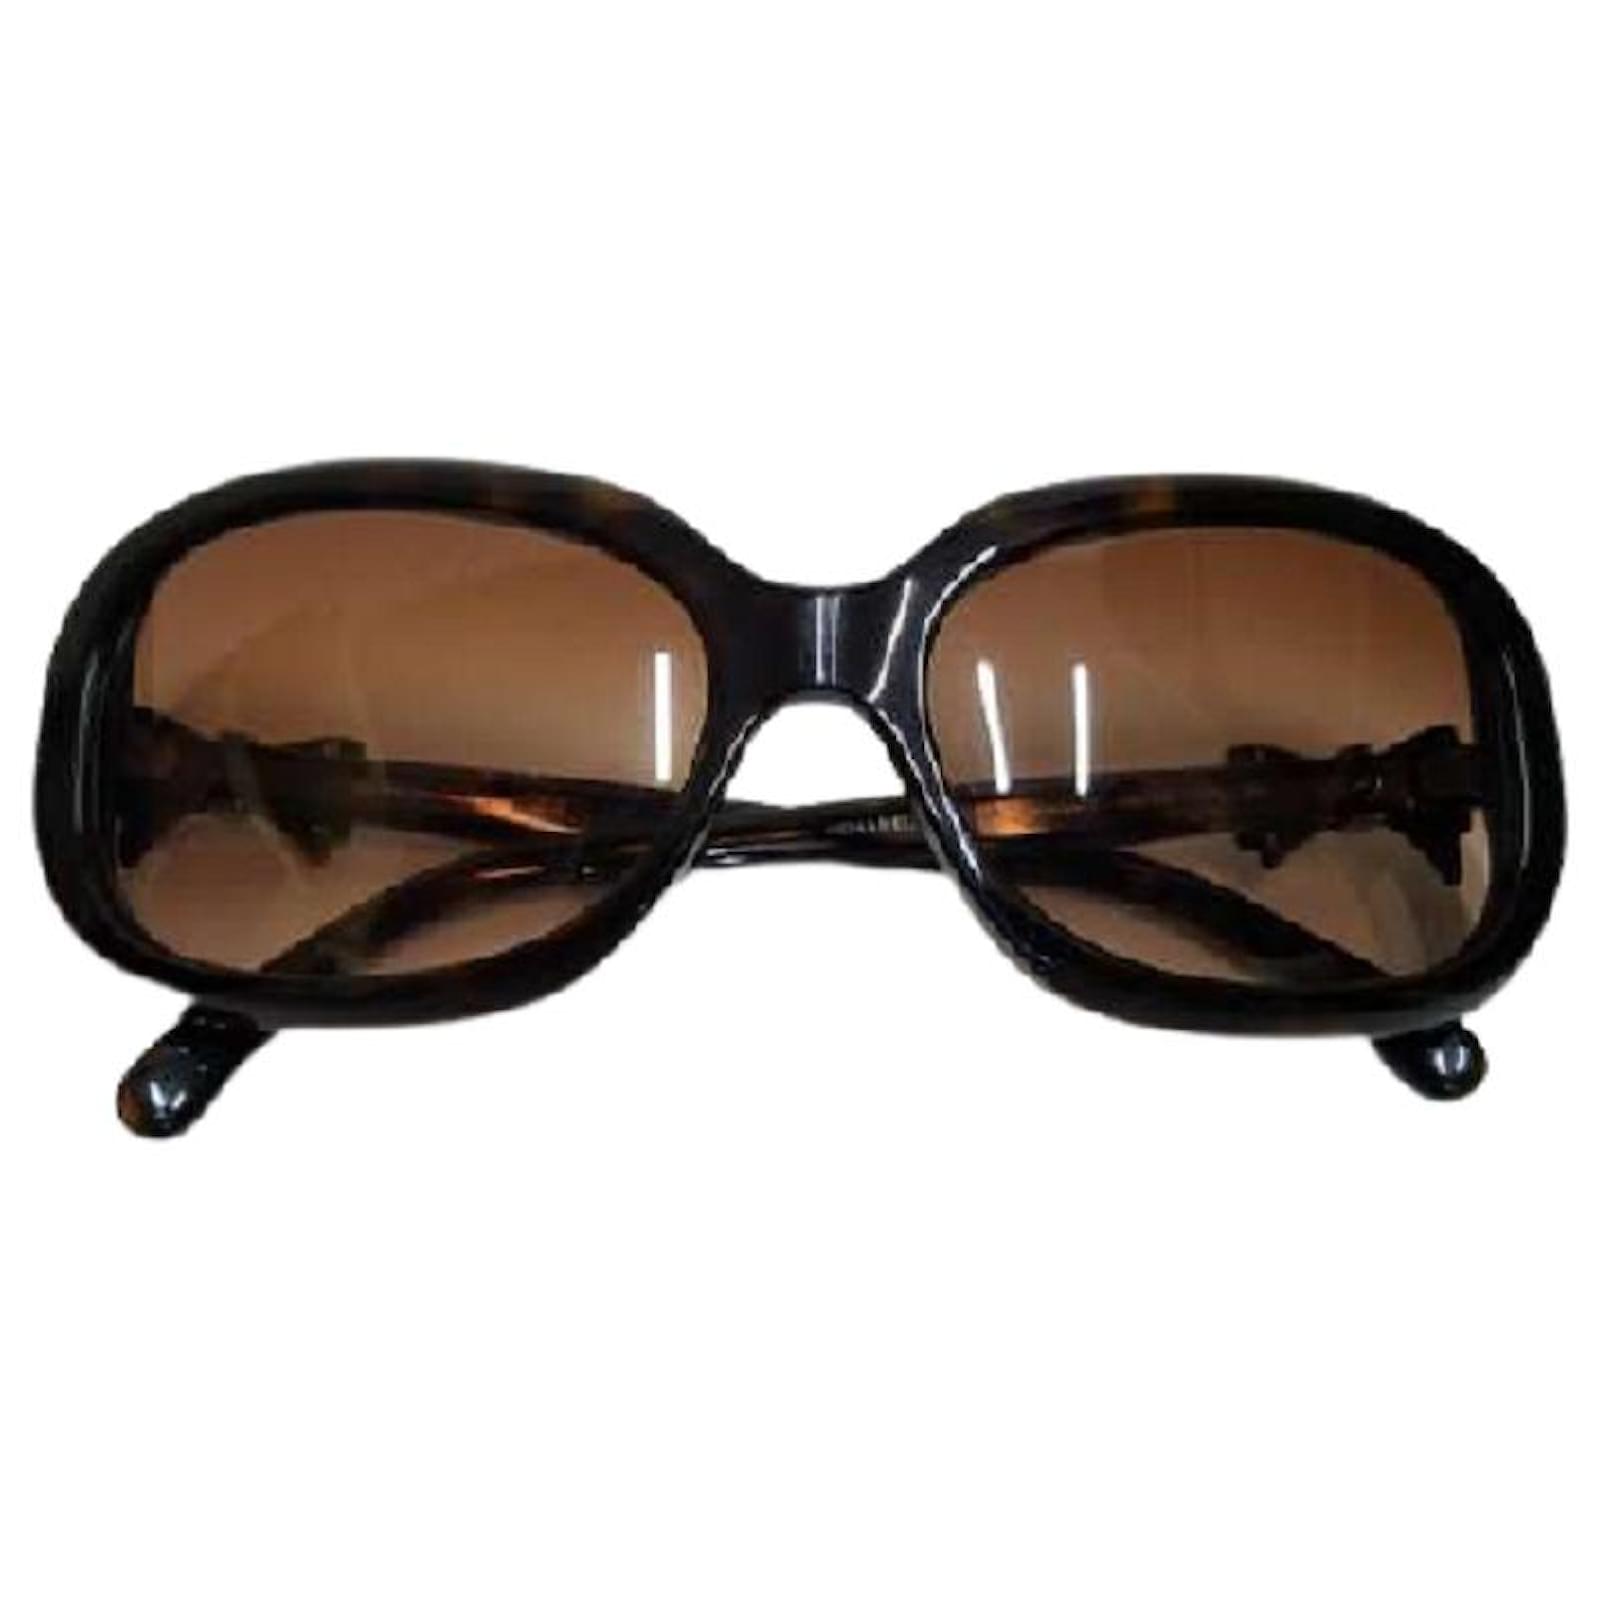 Used] CHANEL Sunglasses Glasses / Sunglasses Sun Glasses 5170-A